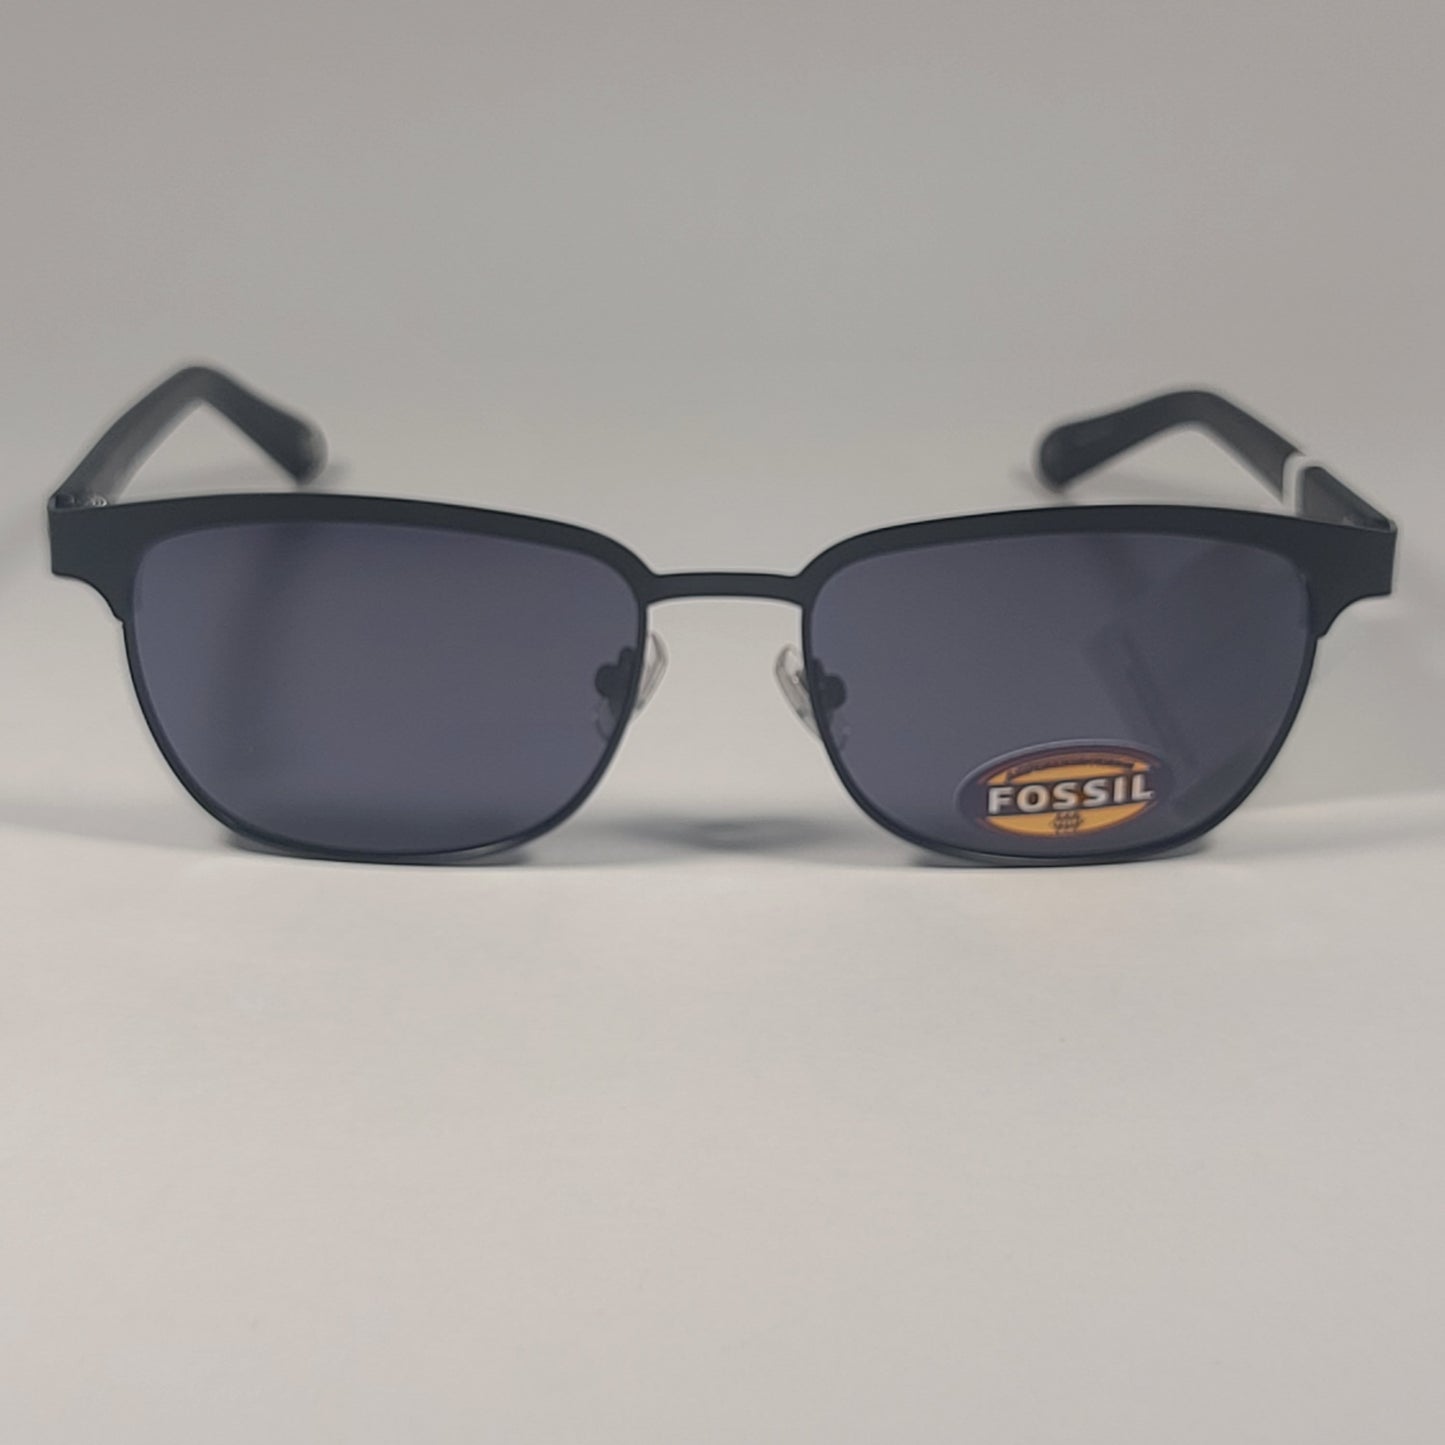 Fossil FW120 Club Sunglasses Matte Black Metal Plastic Frame Gray Tinted Lens - Sunglasses